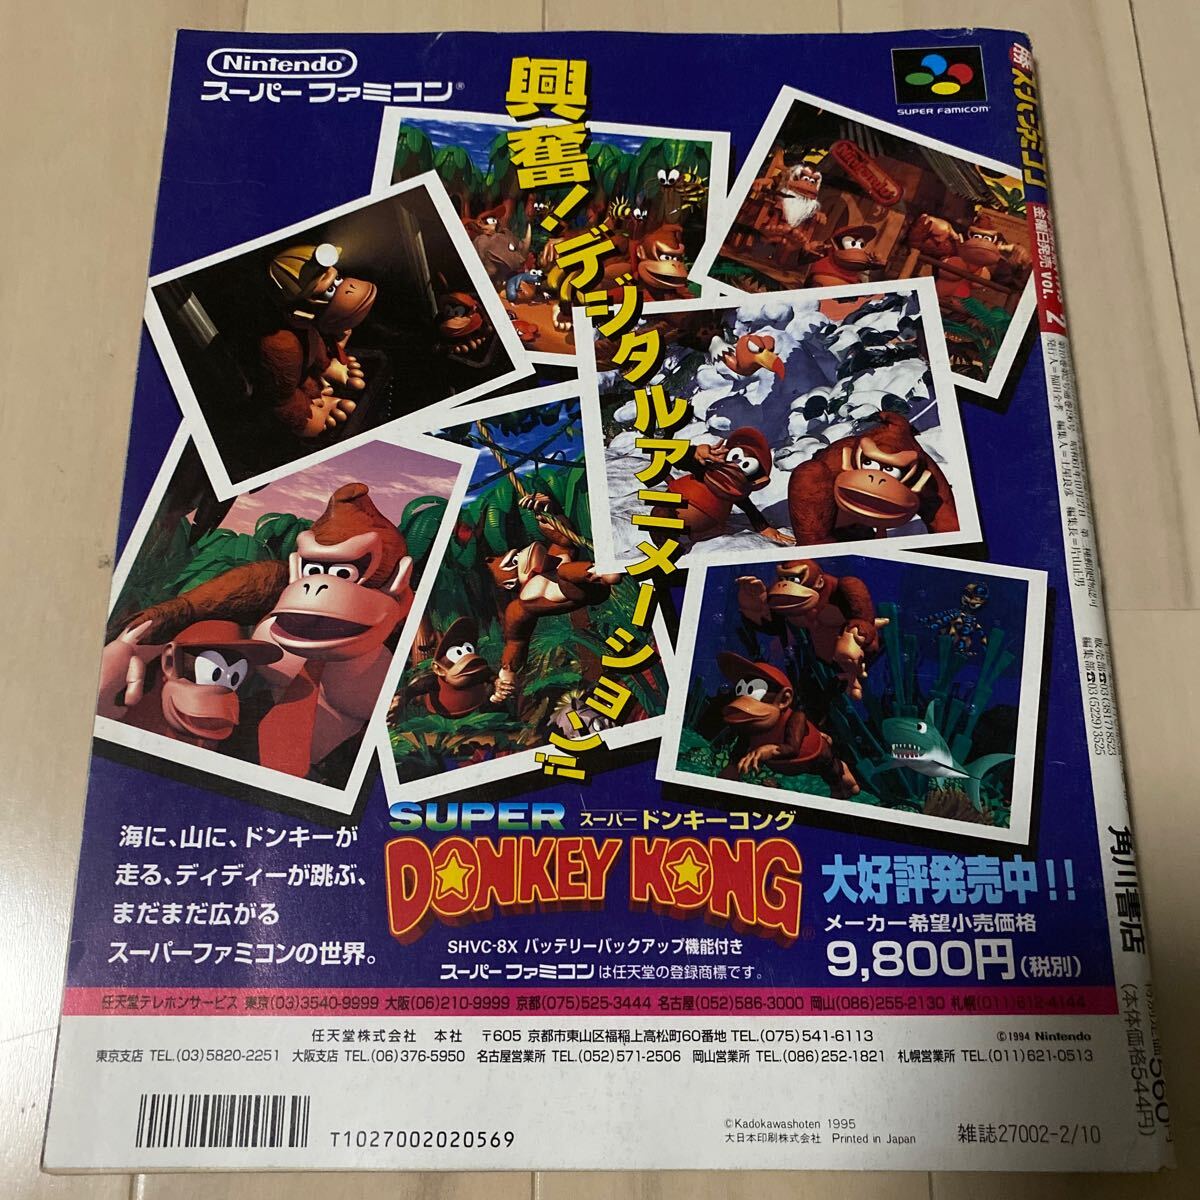  maru . Super Famicom 1995 2